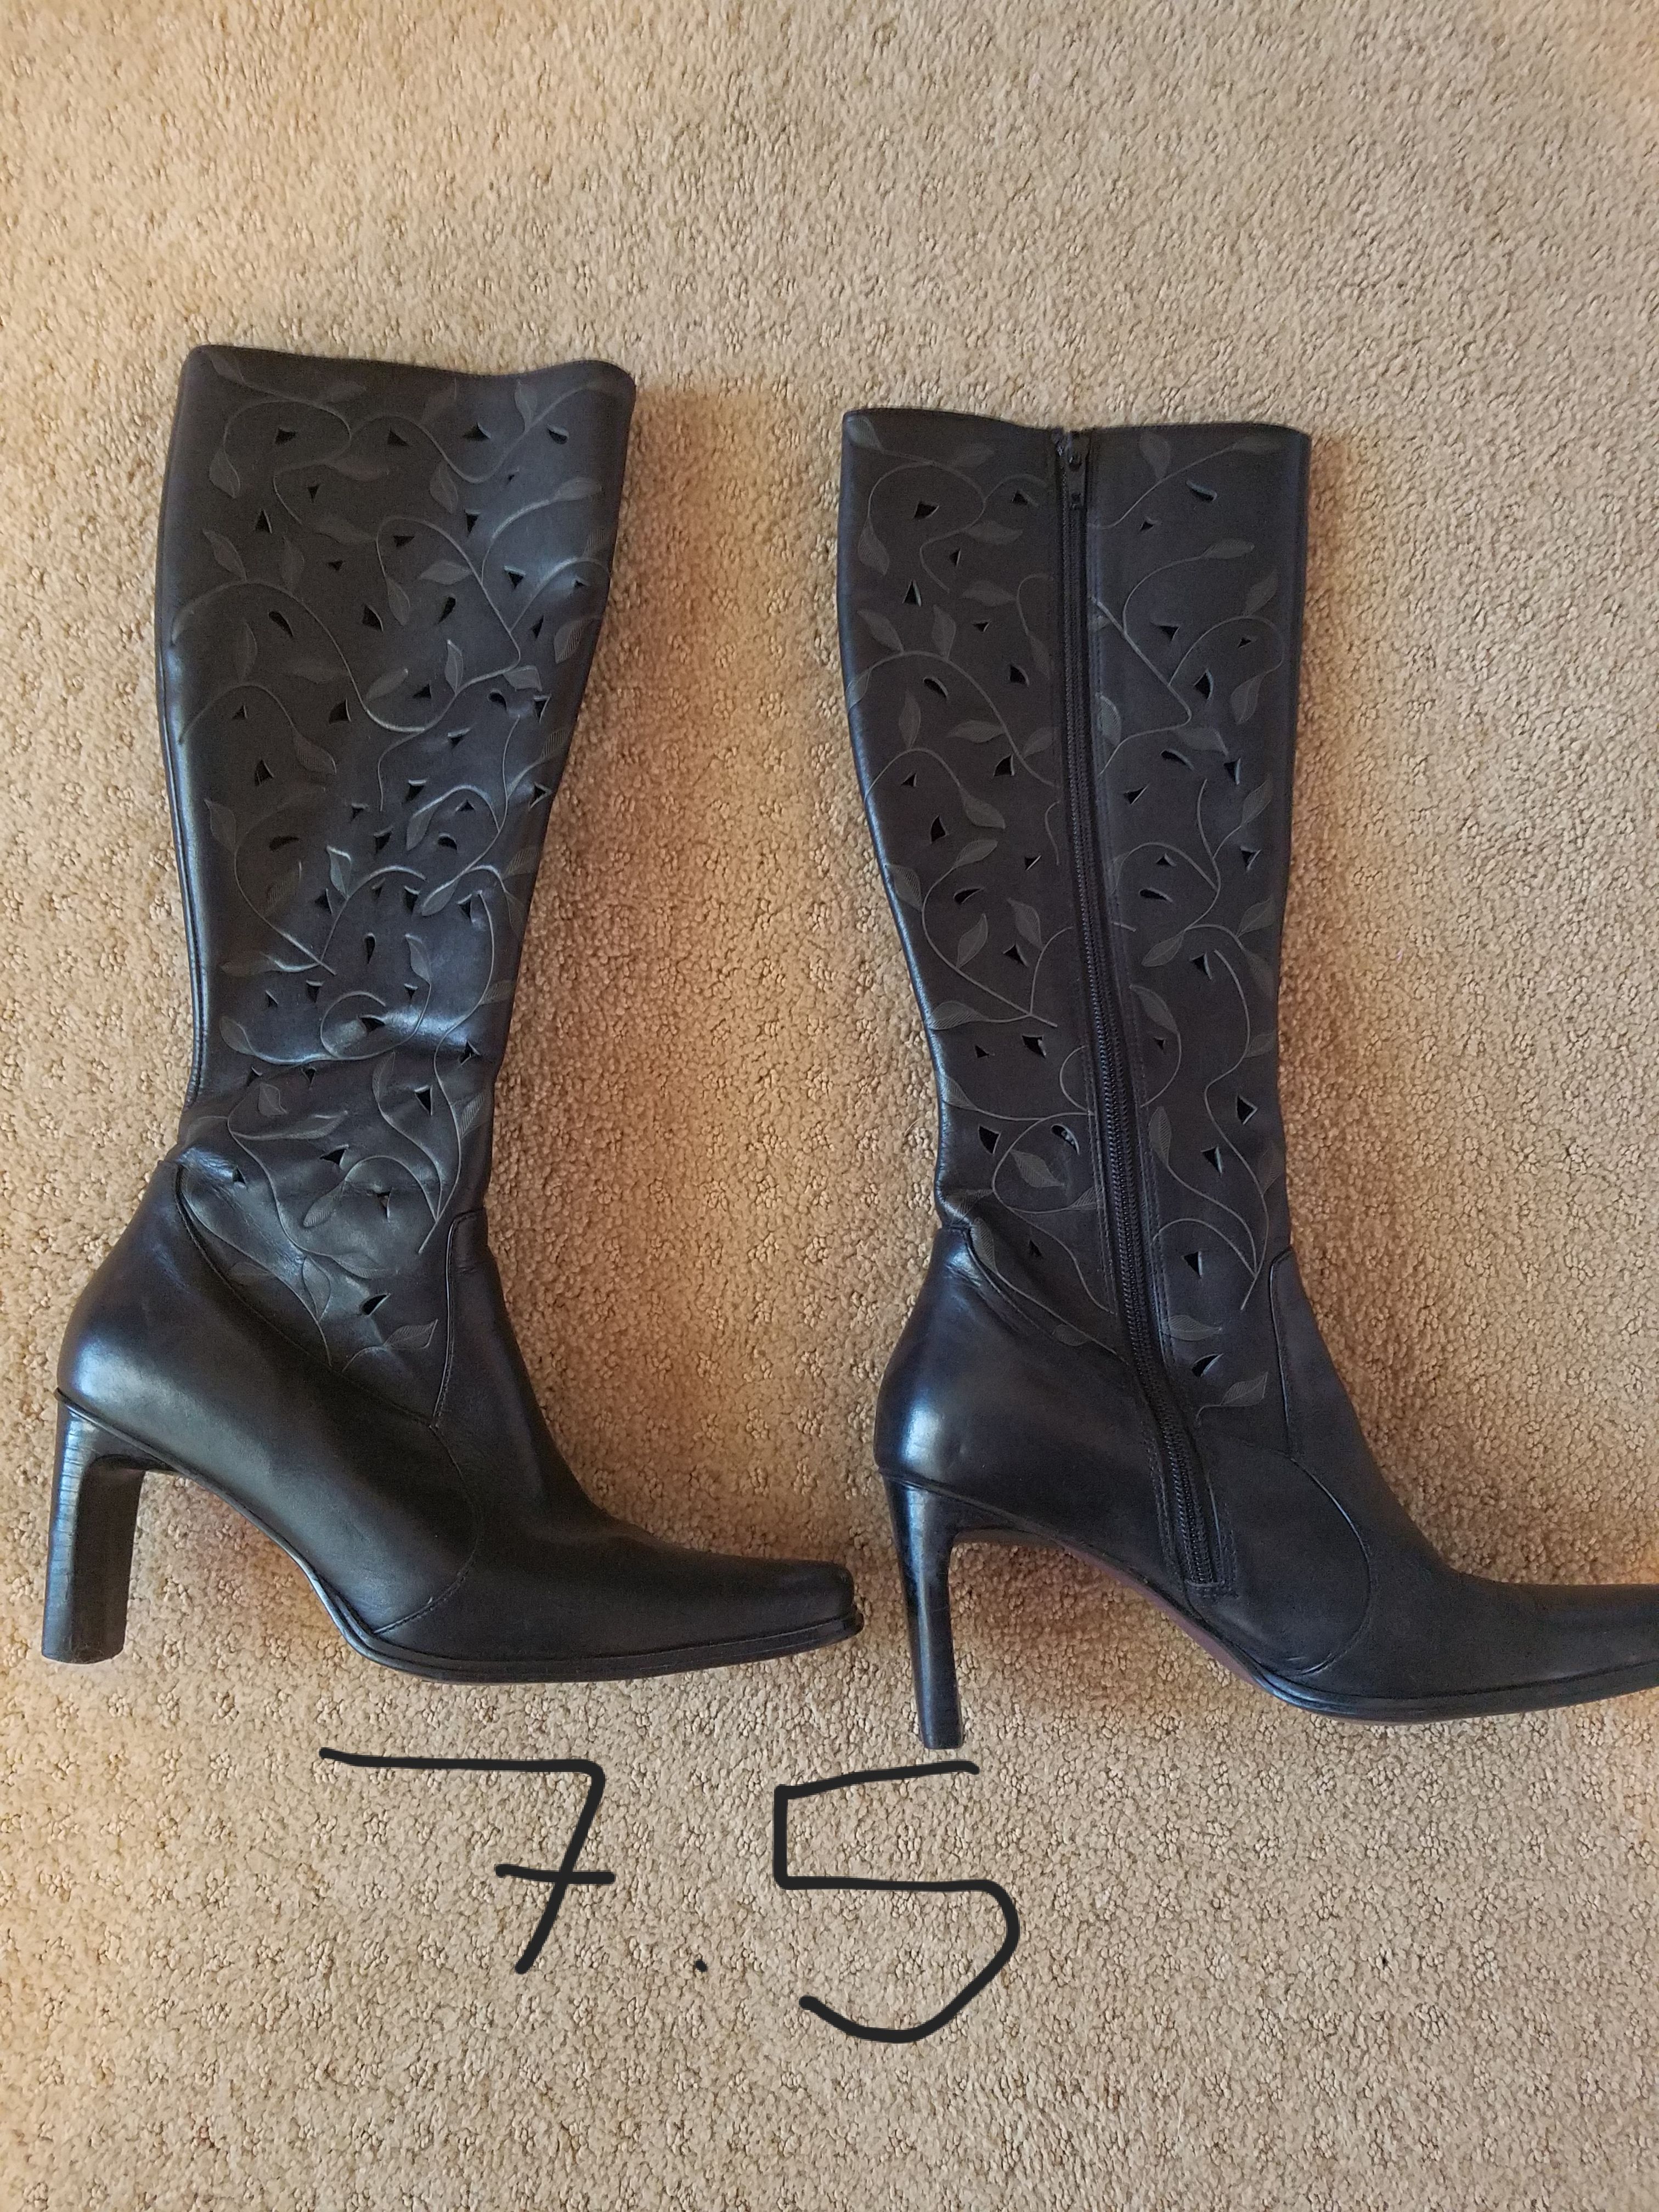 Women's 7.5 black boots